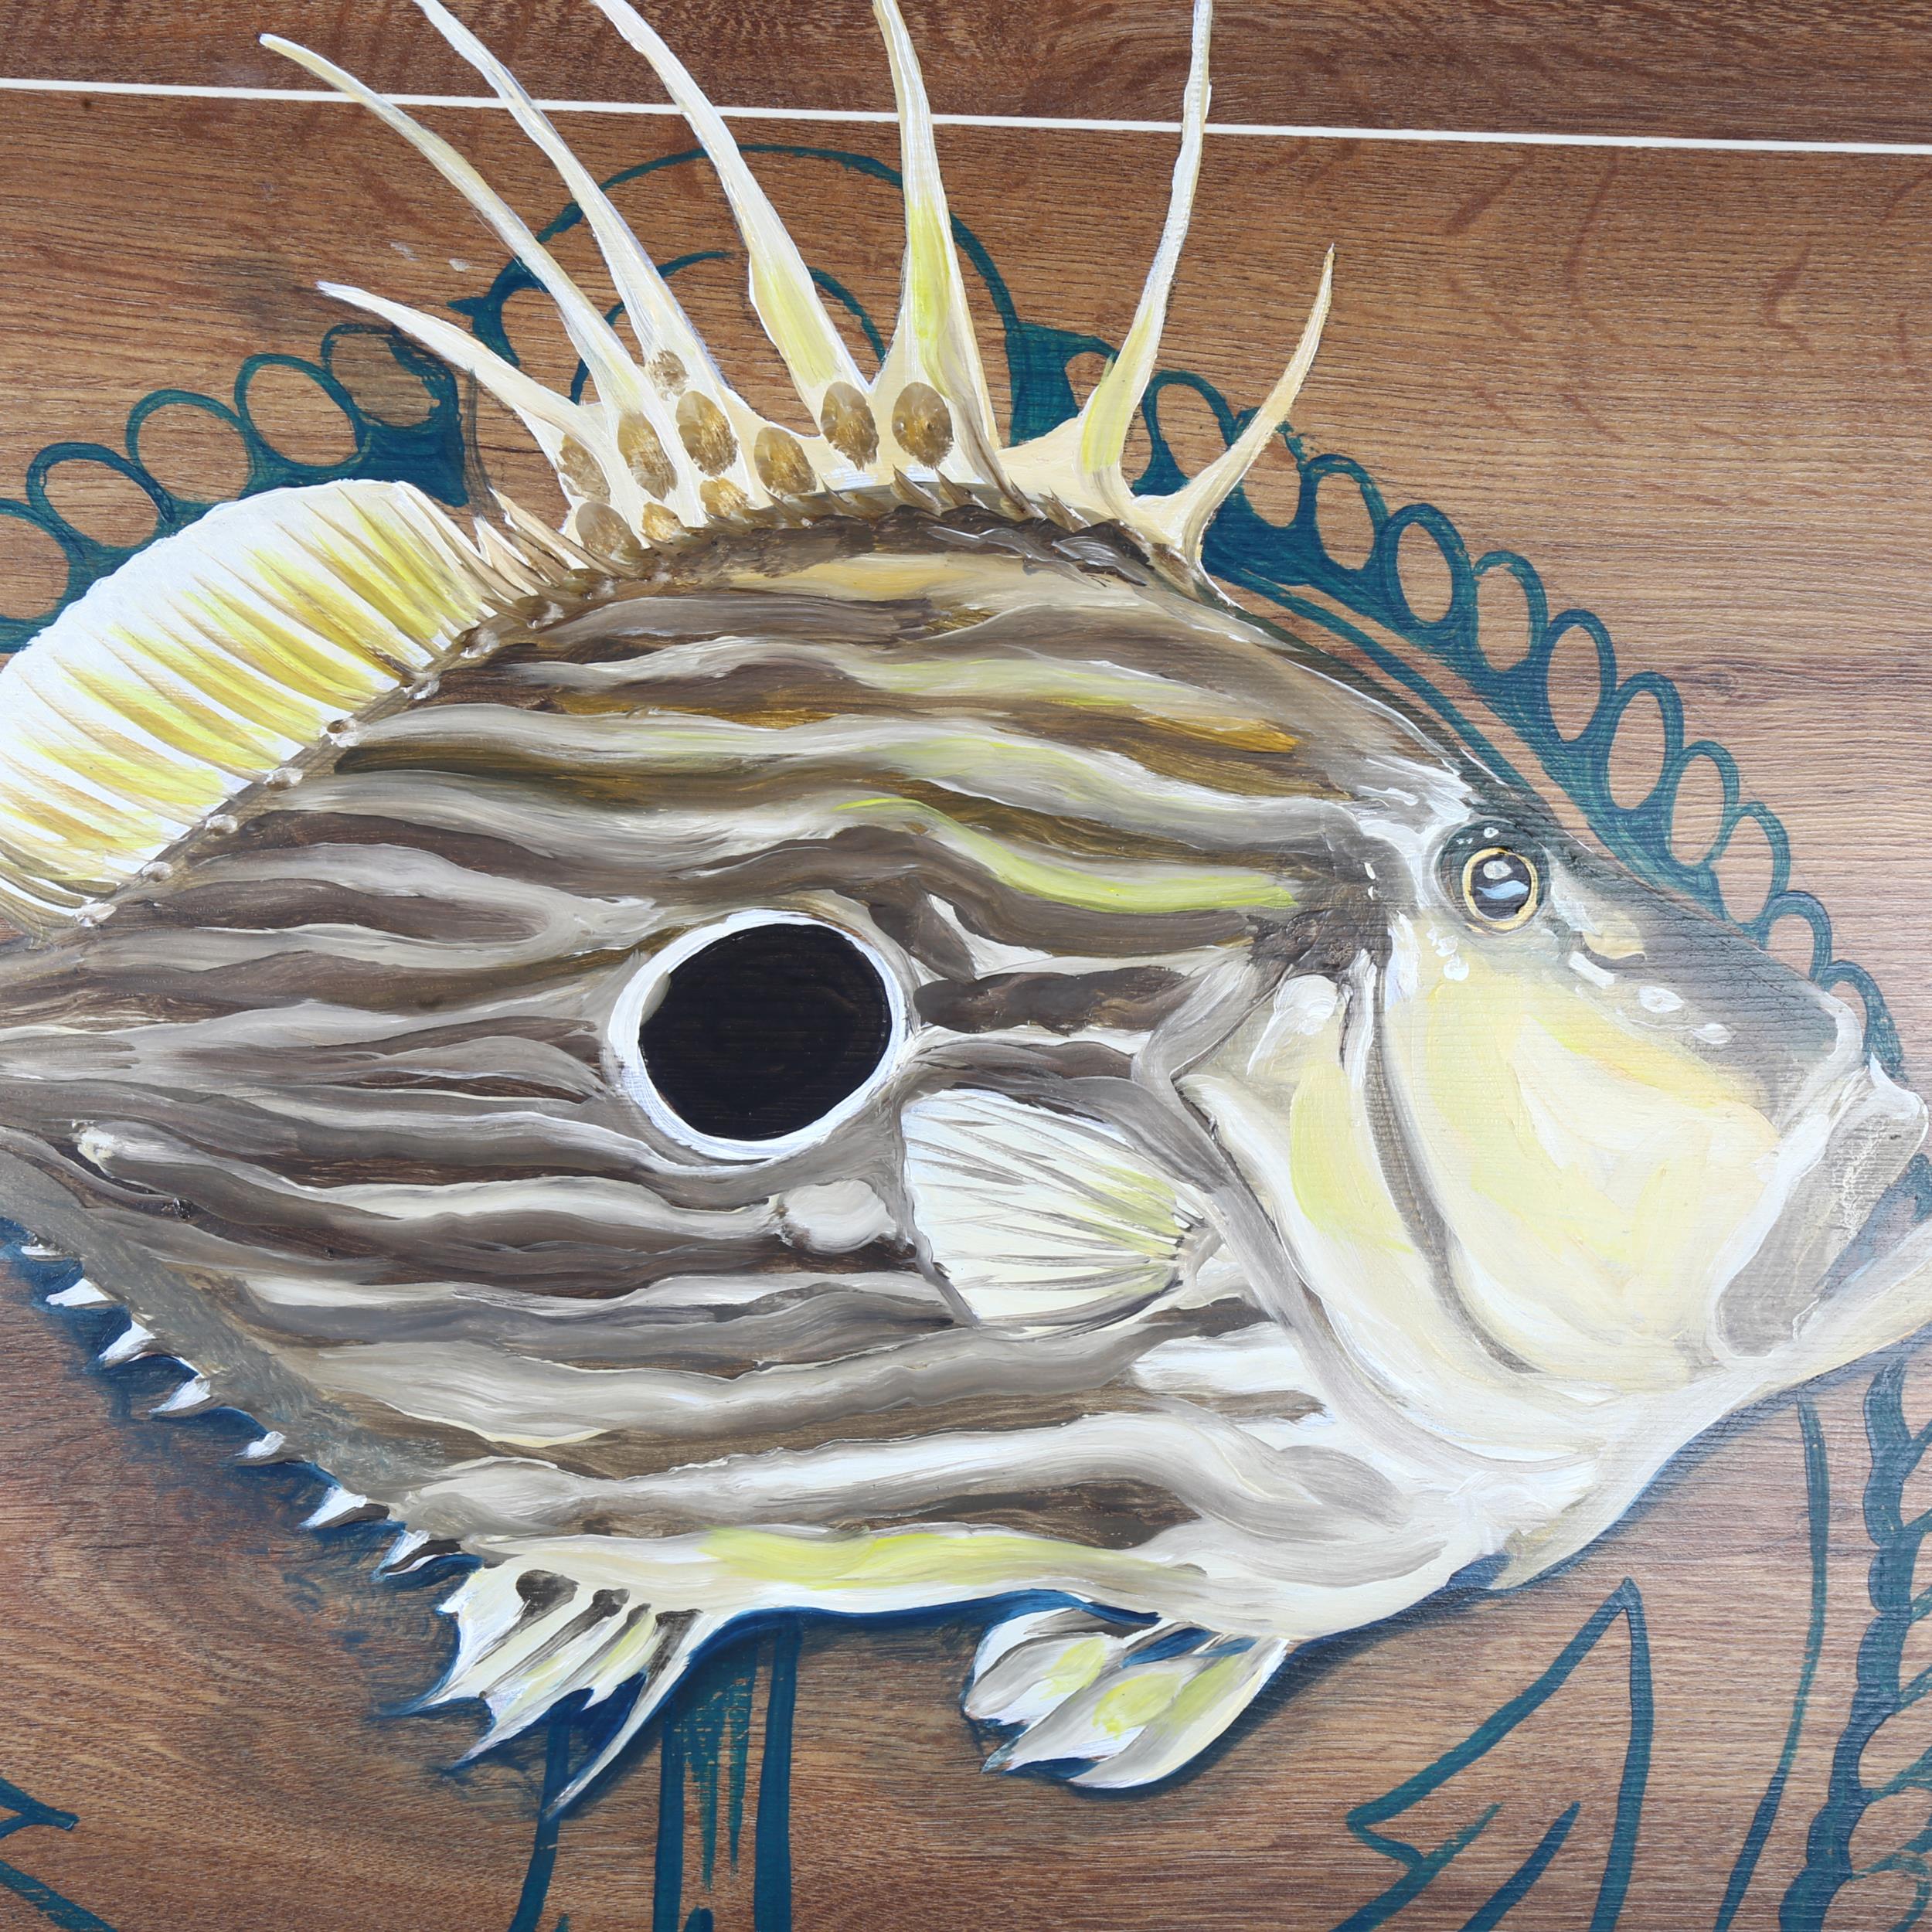 Clive Fredriksson, oil on laminate panel "Brighton Fish Market", 88cm x 68cm, framed - Image 2 of 2